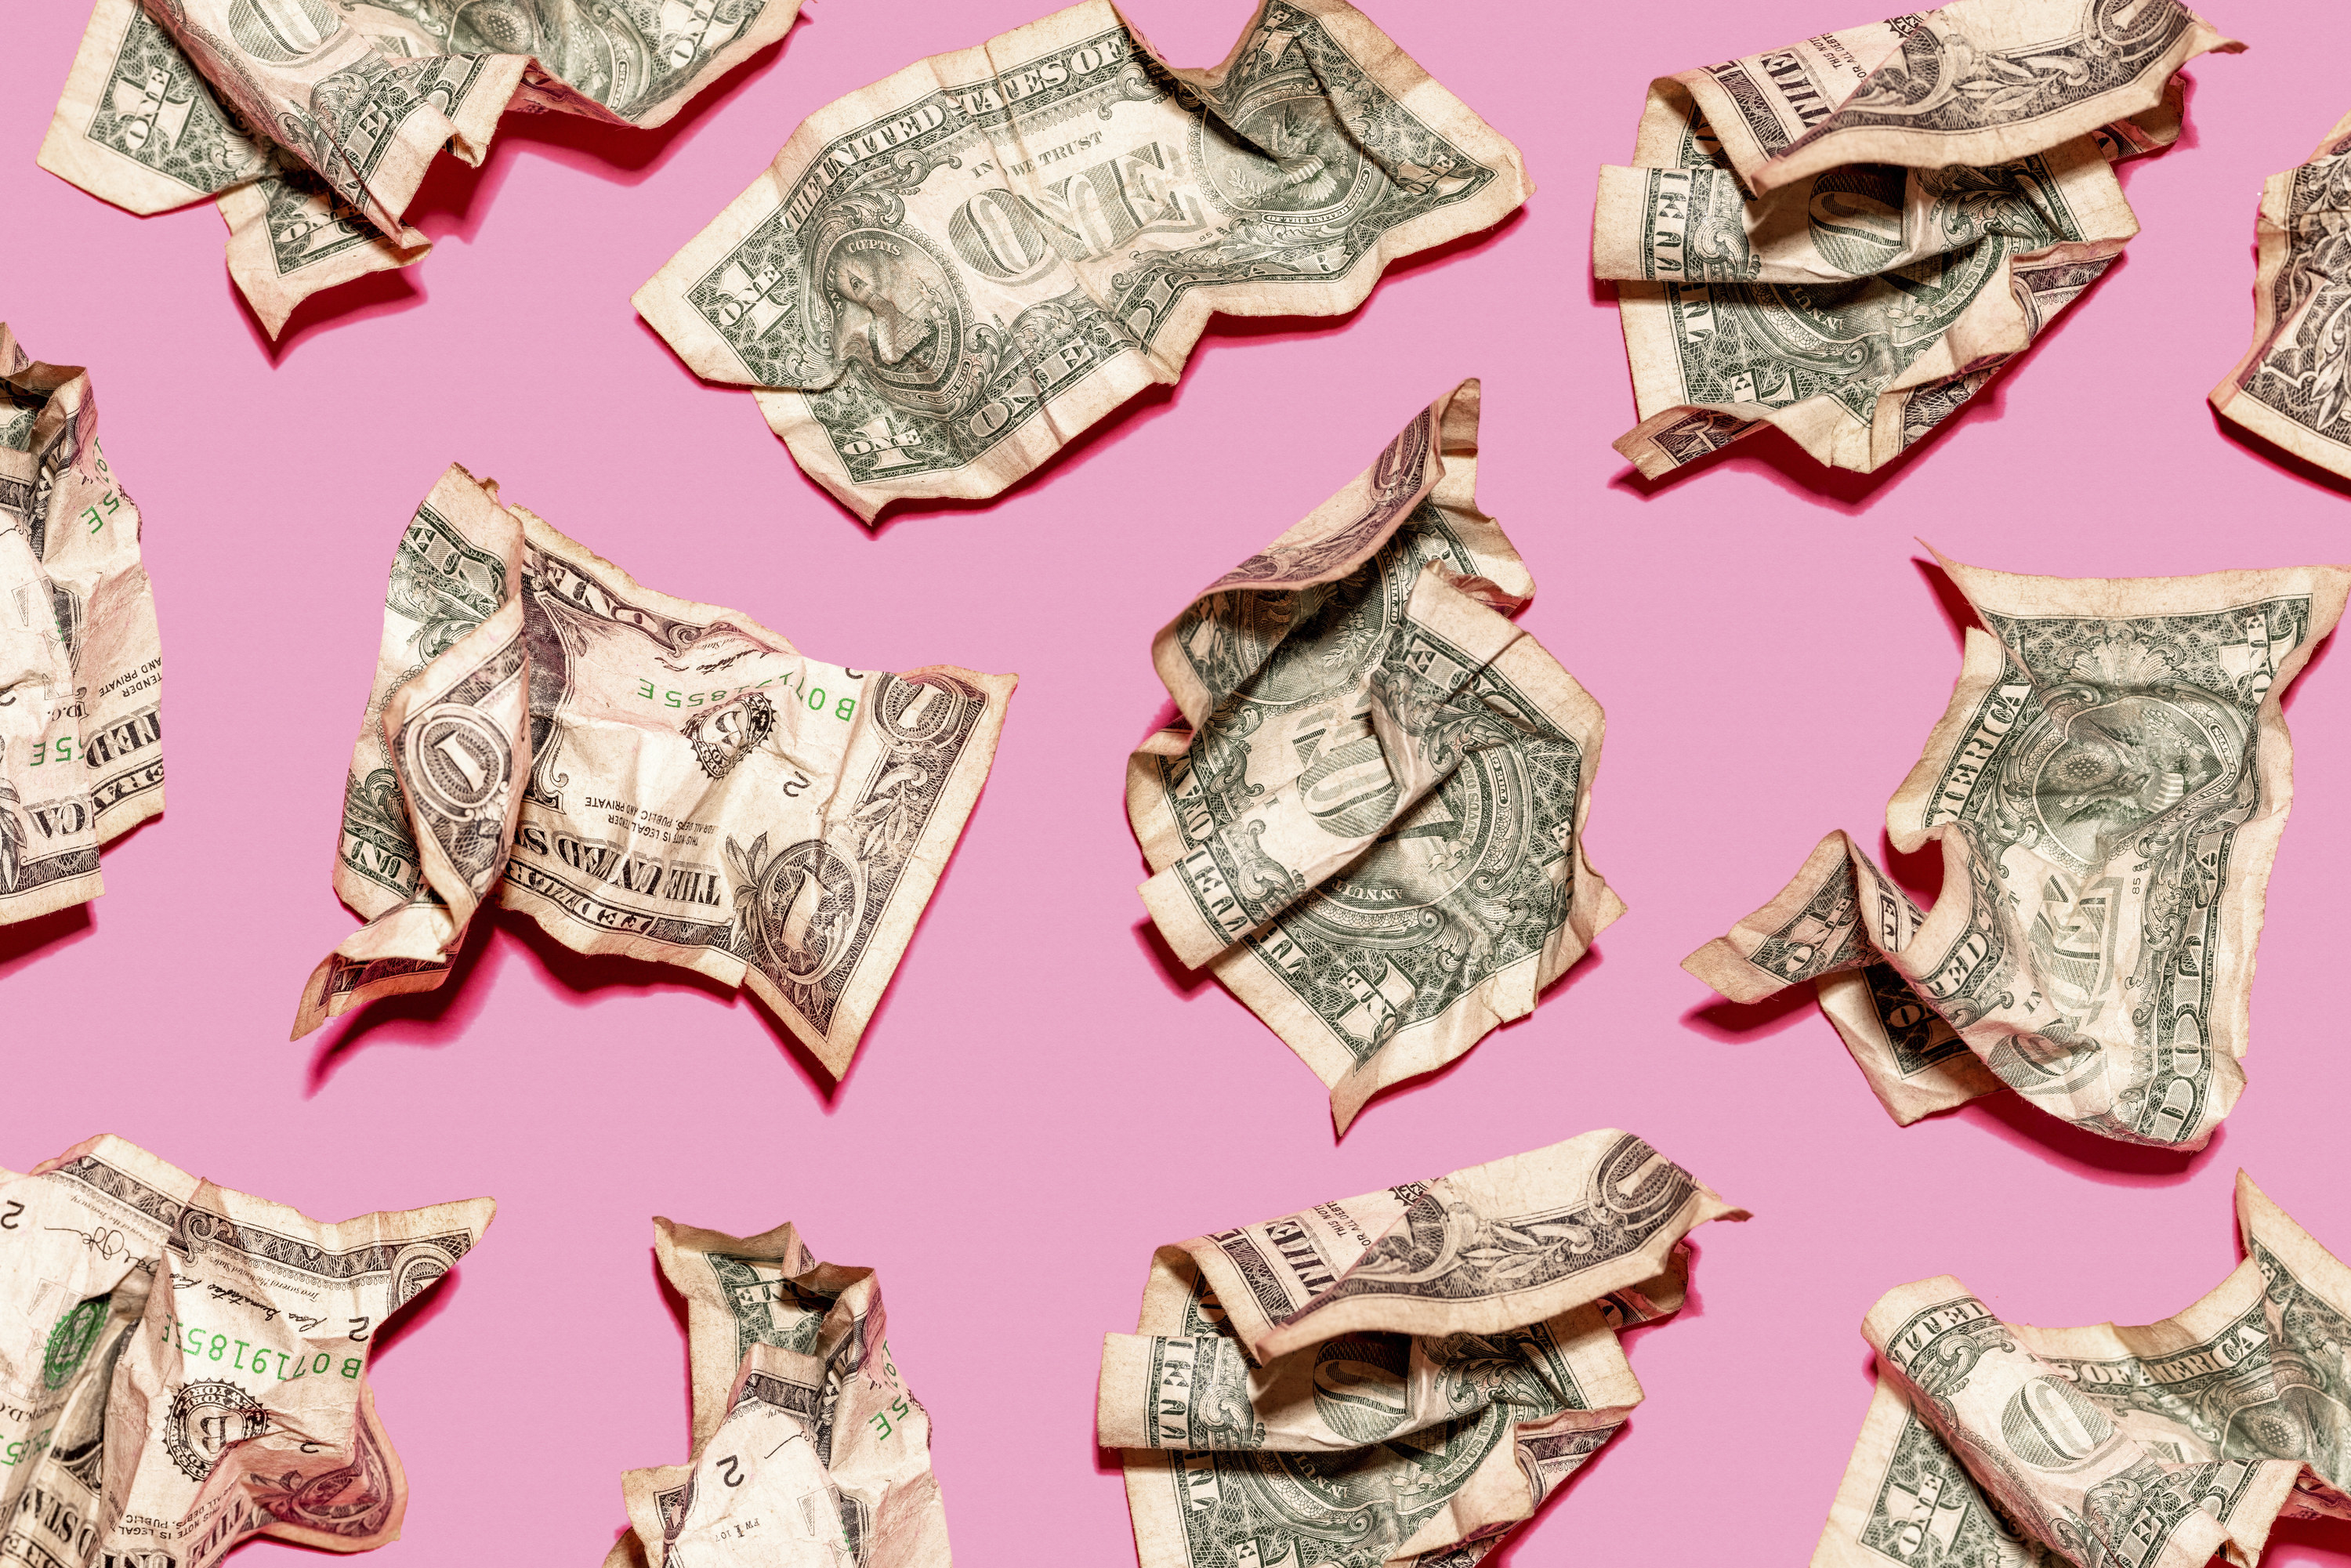 Crumbled dollar bills against a pink background